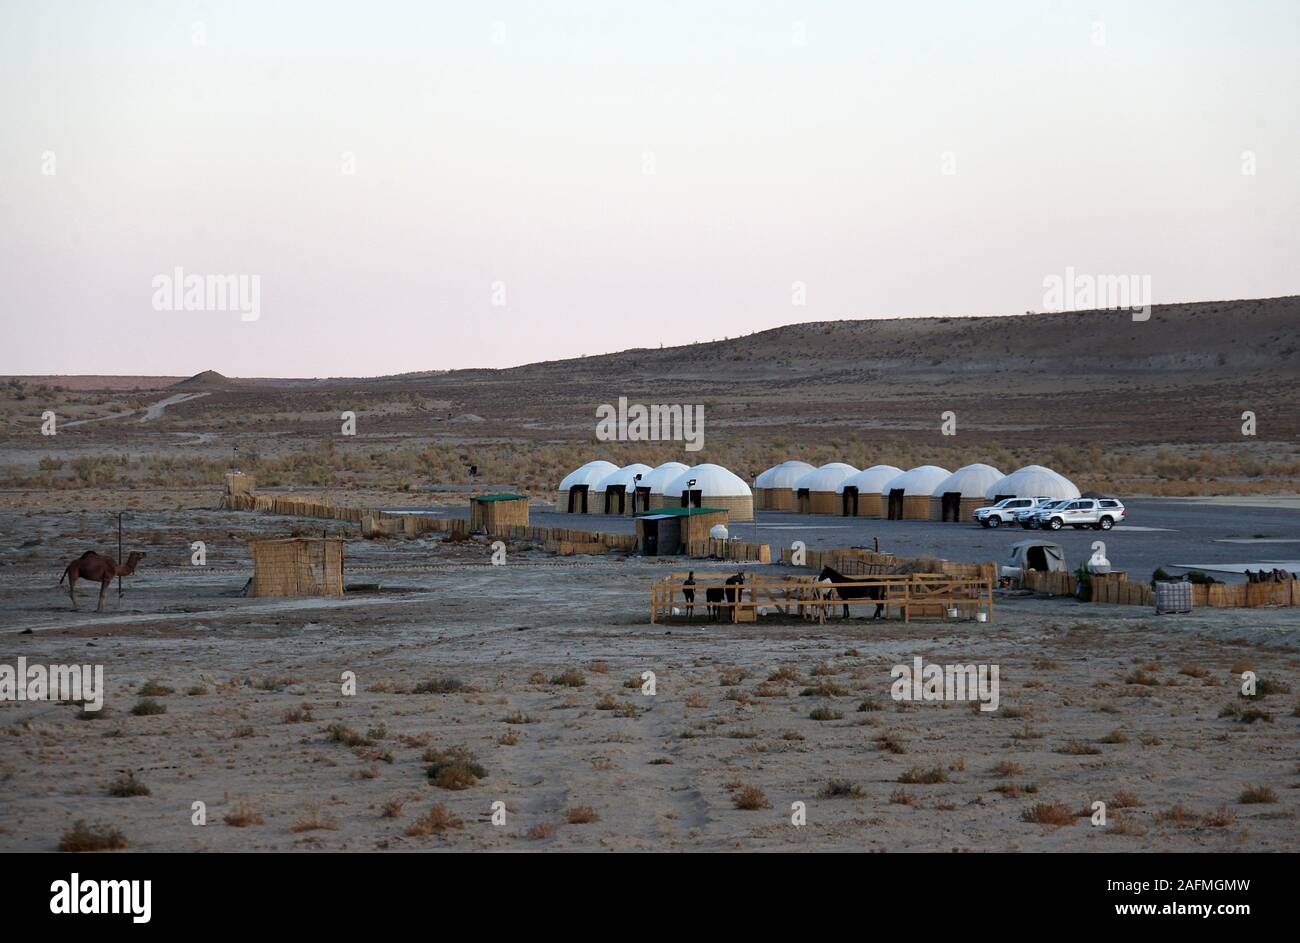 Campsite at Darvaza Gas Crater in the Karakum Desert of Turkmenistan Stock Photo